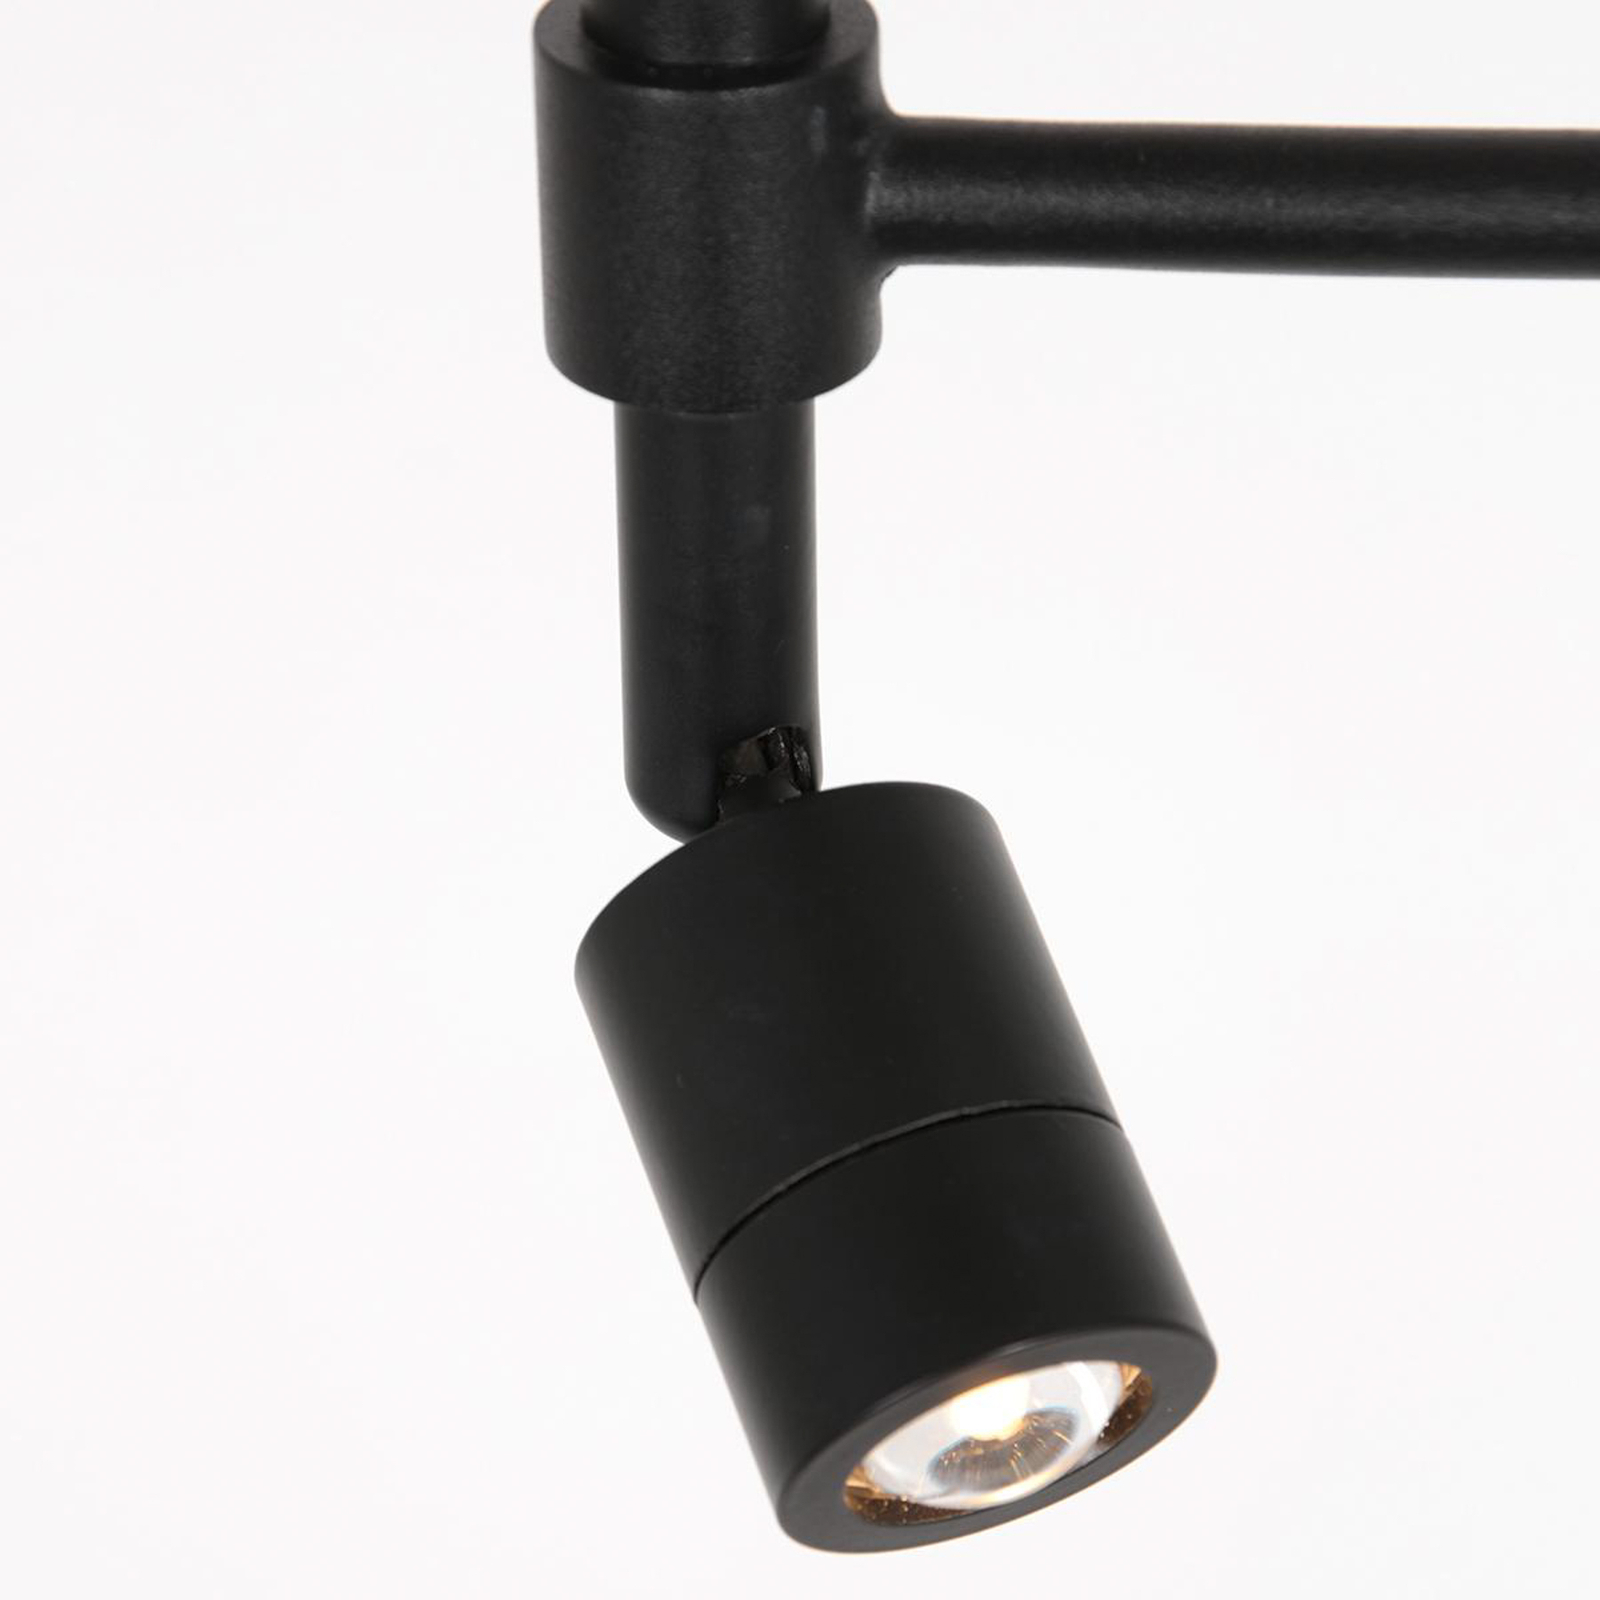 Stang vloerlamp, LED leeslampje, vlechtwerk naturel/zwart